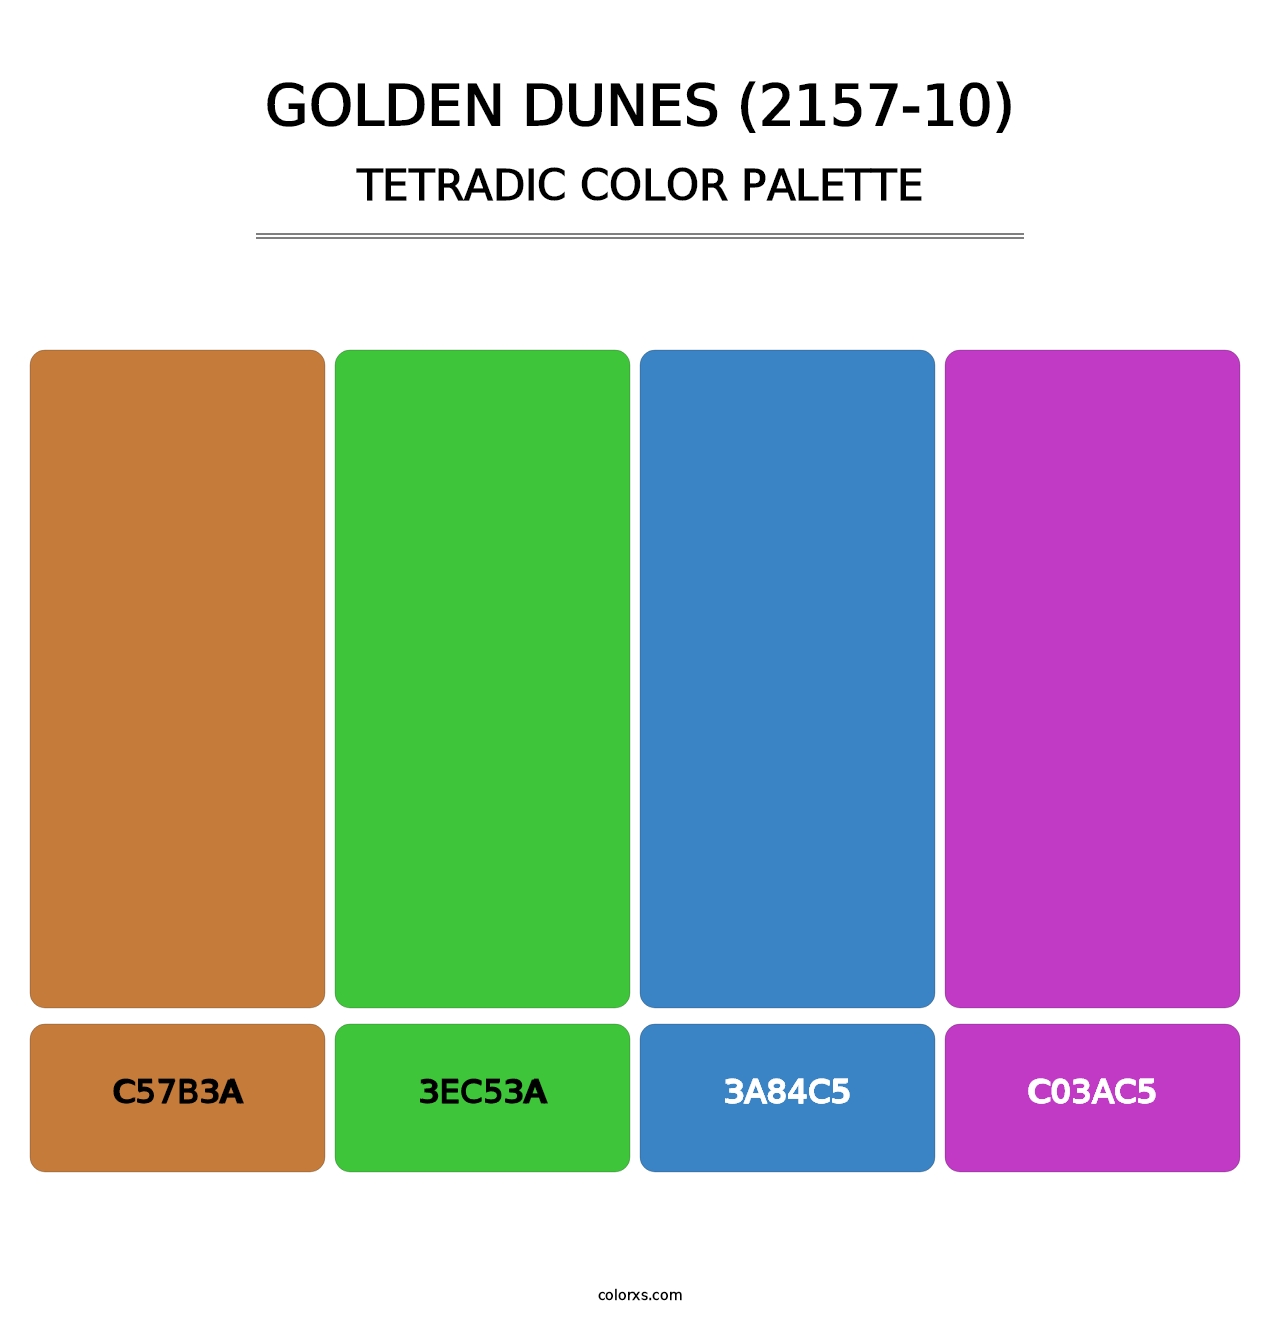 Golden Dunes (2157-10) - Tetradic Color Palette